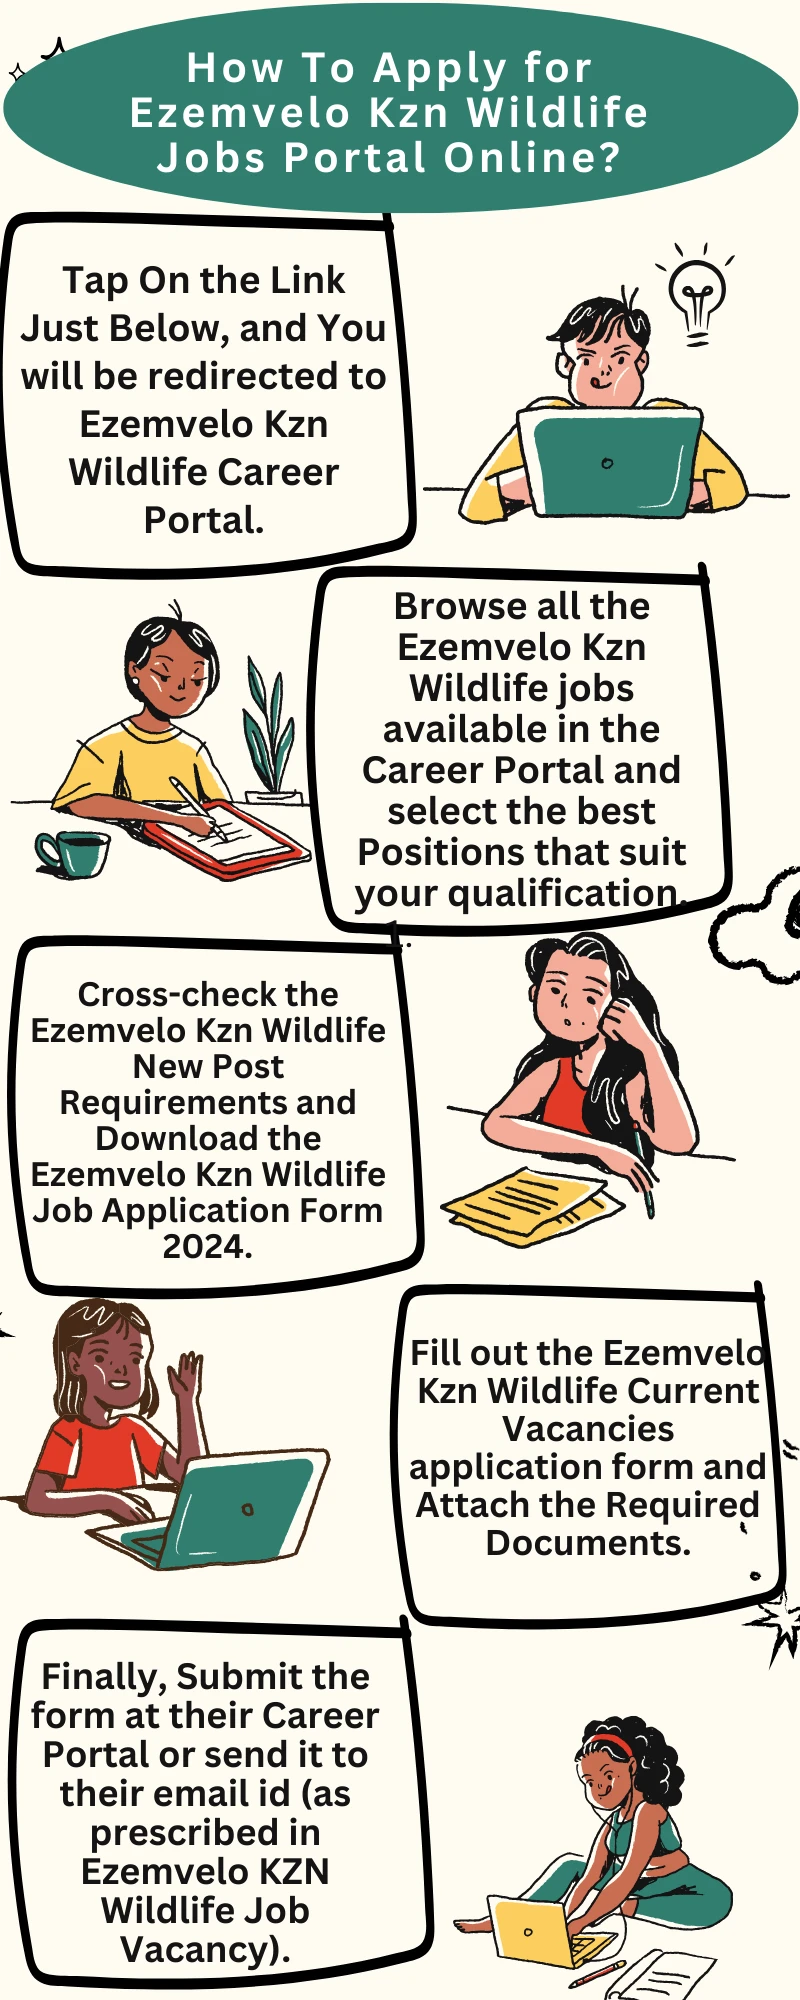 How To Apply for Ezemvelo Kzn Wildlife Jobs Portal Online? 